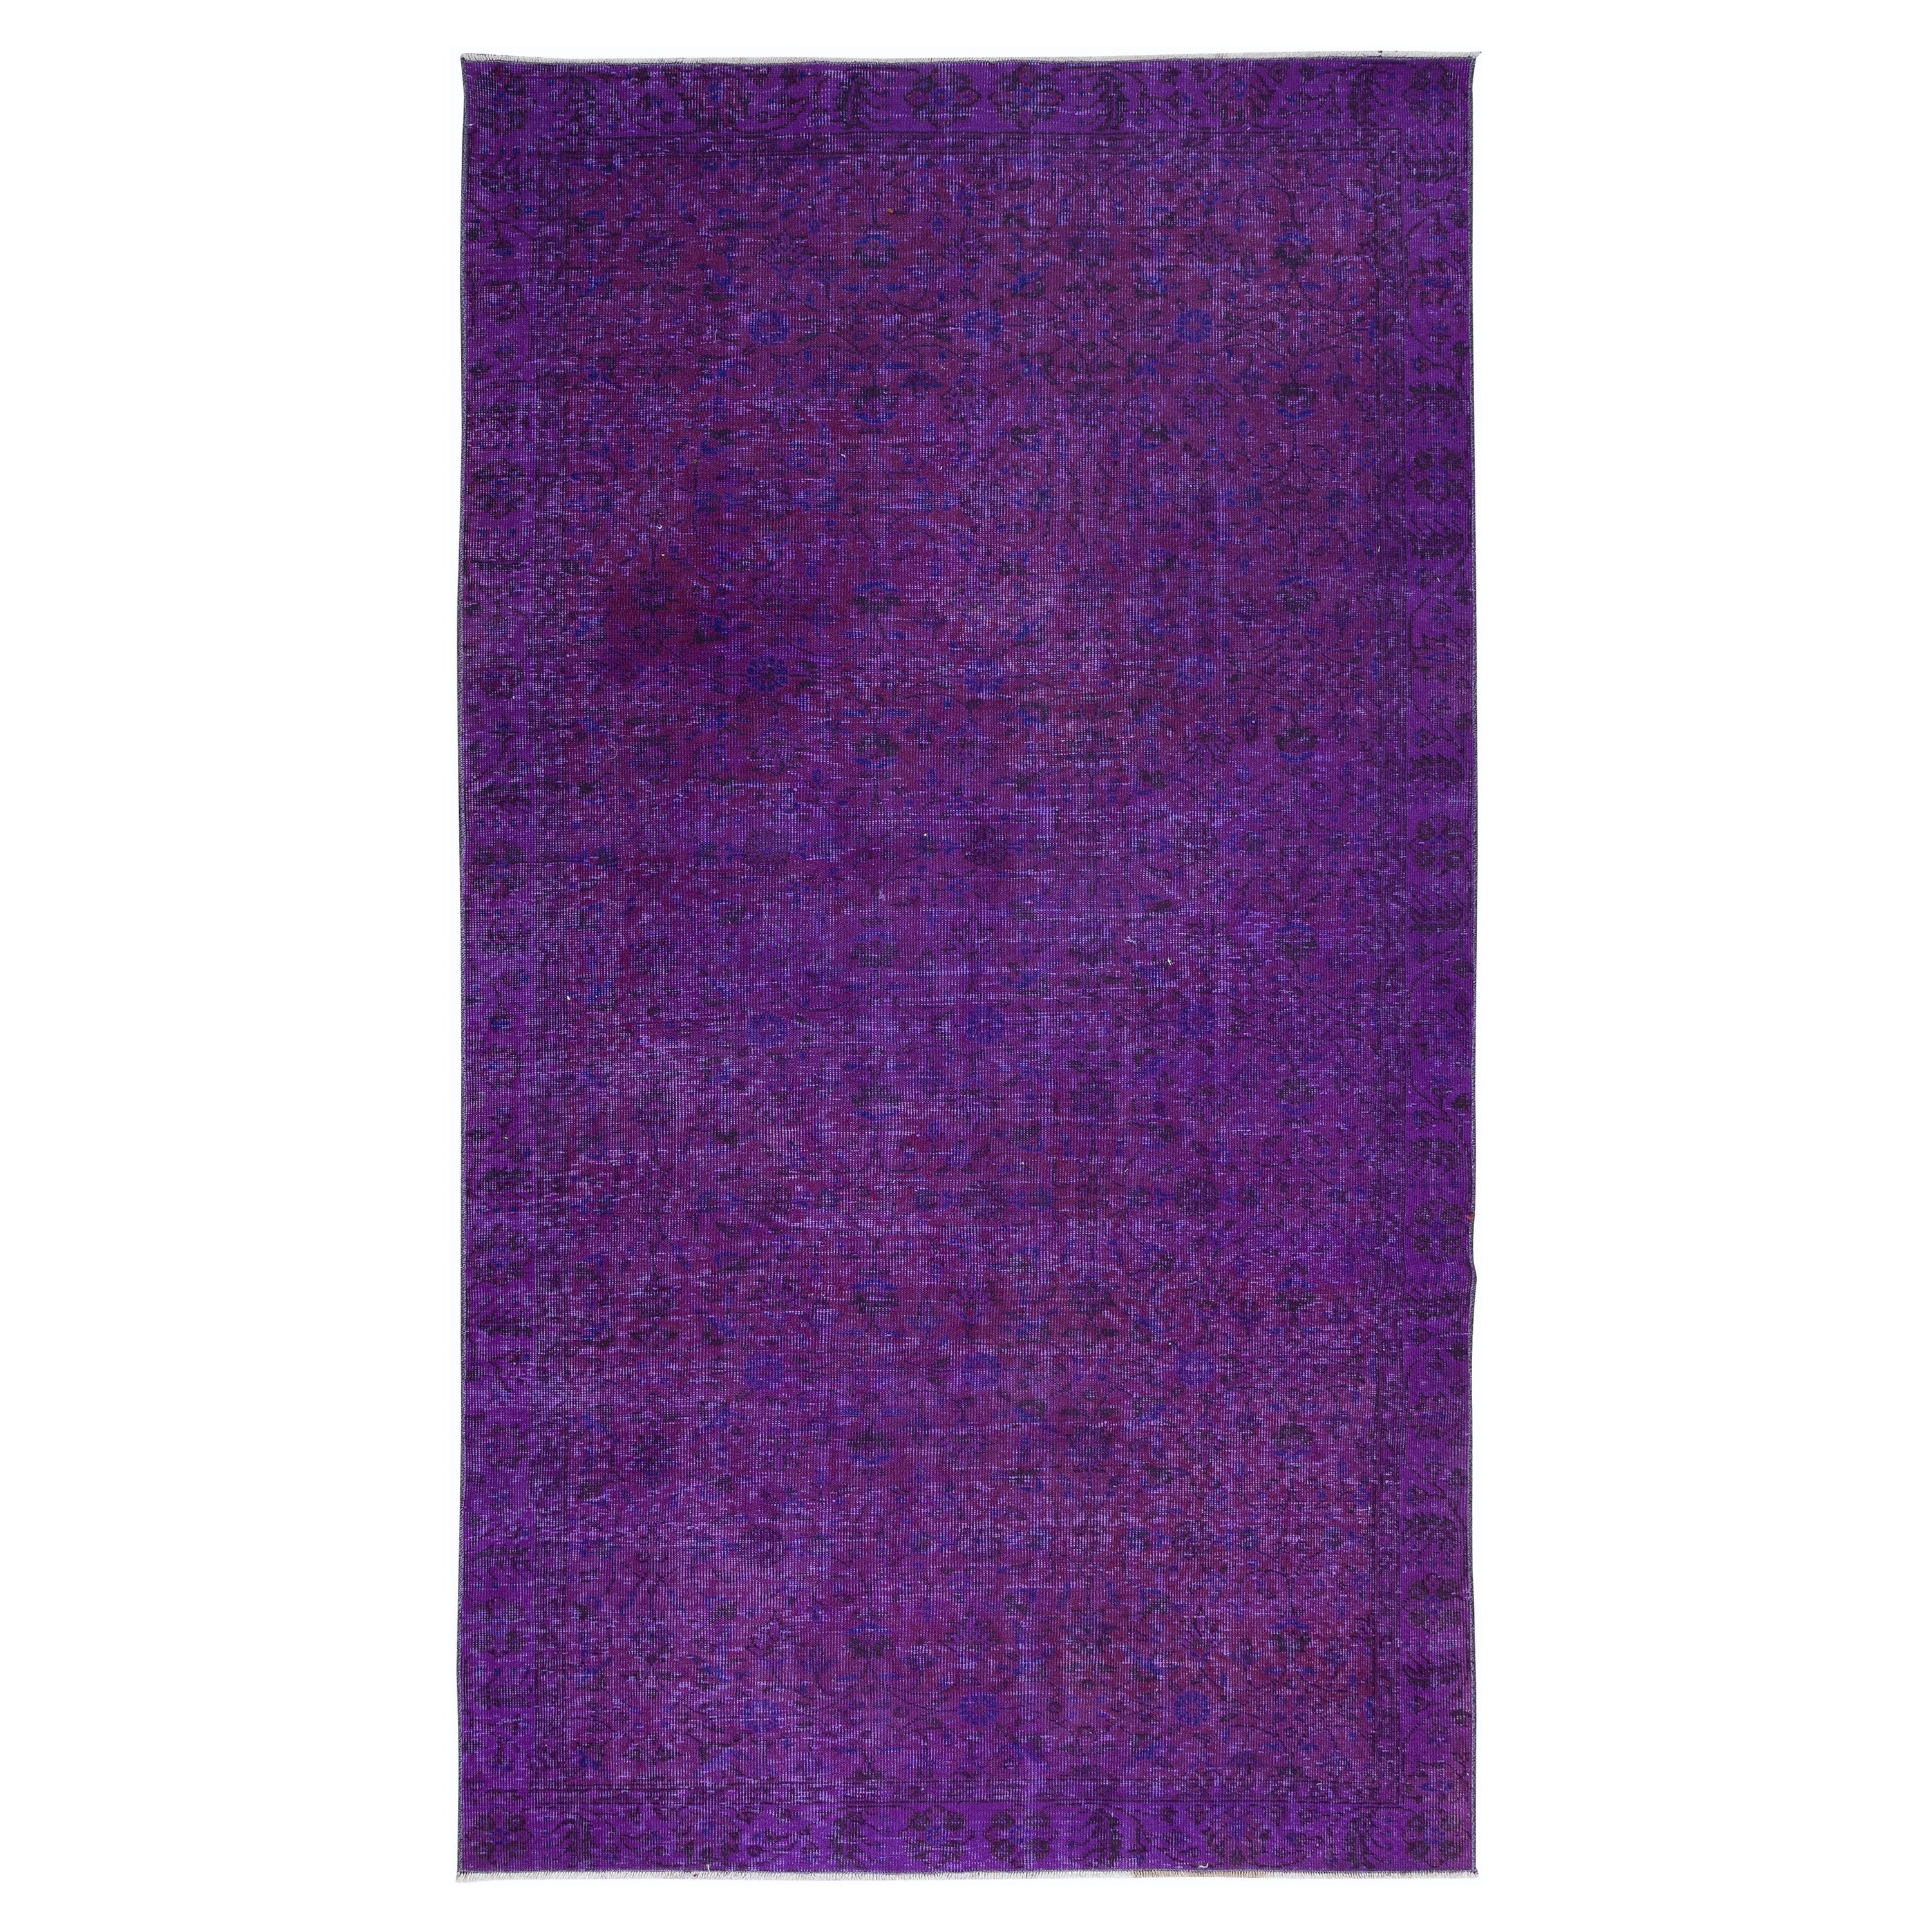 5.3x8.6 Ft Dark Purple Handmade Room Size Area Rug. Modern Floral Turkish Carpet